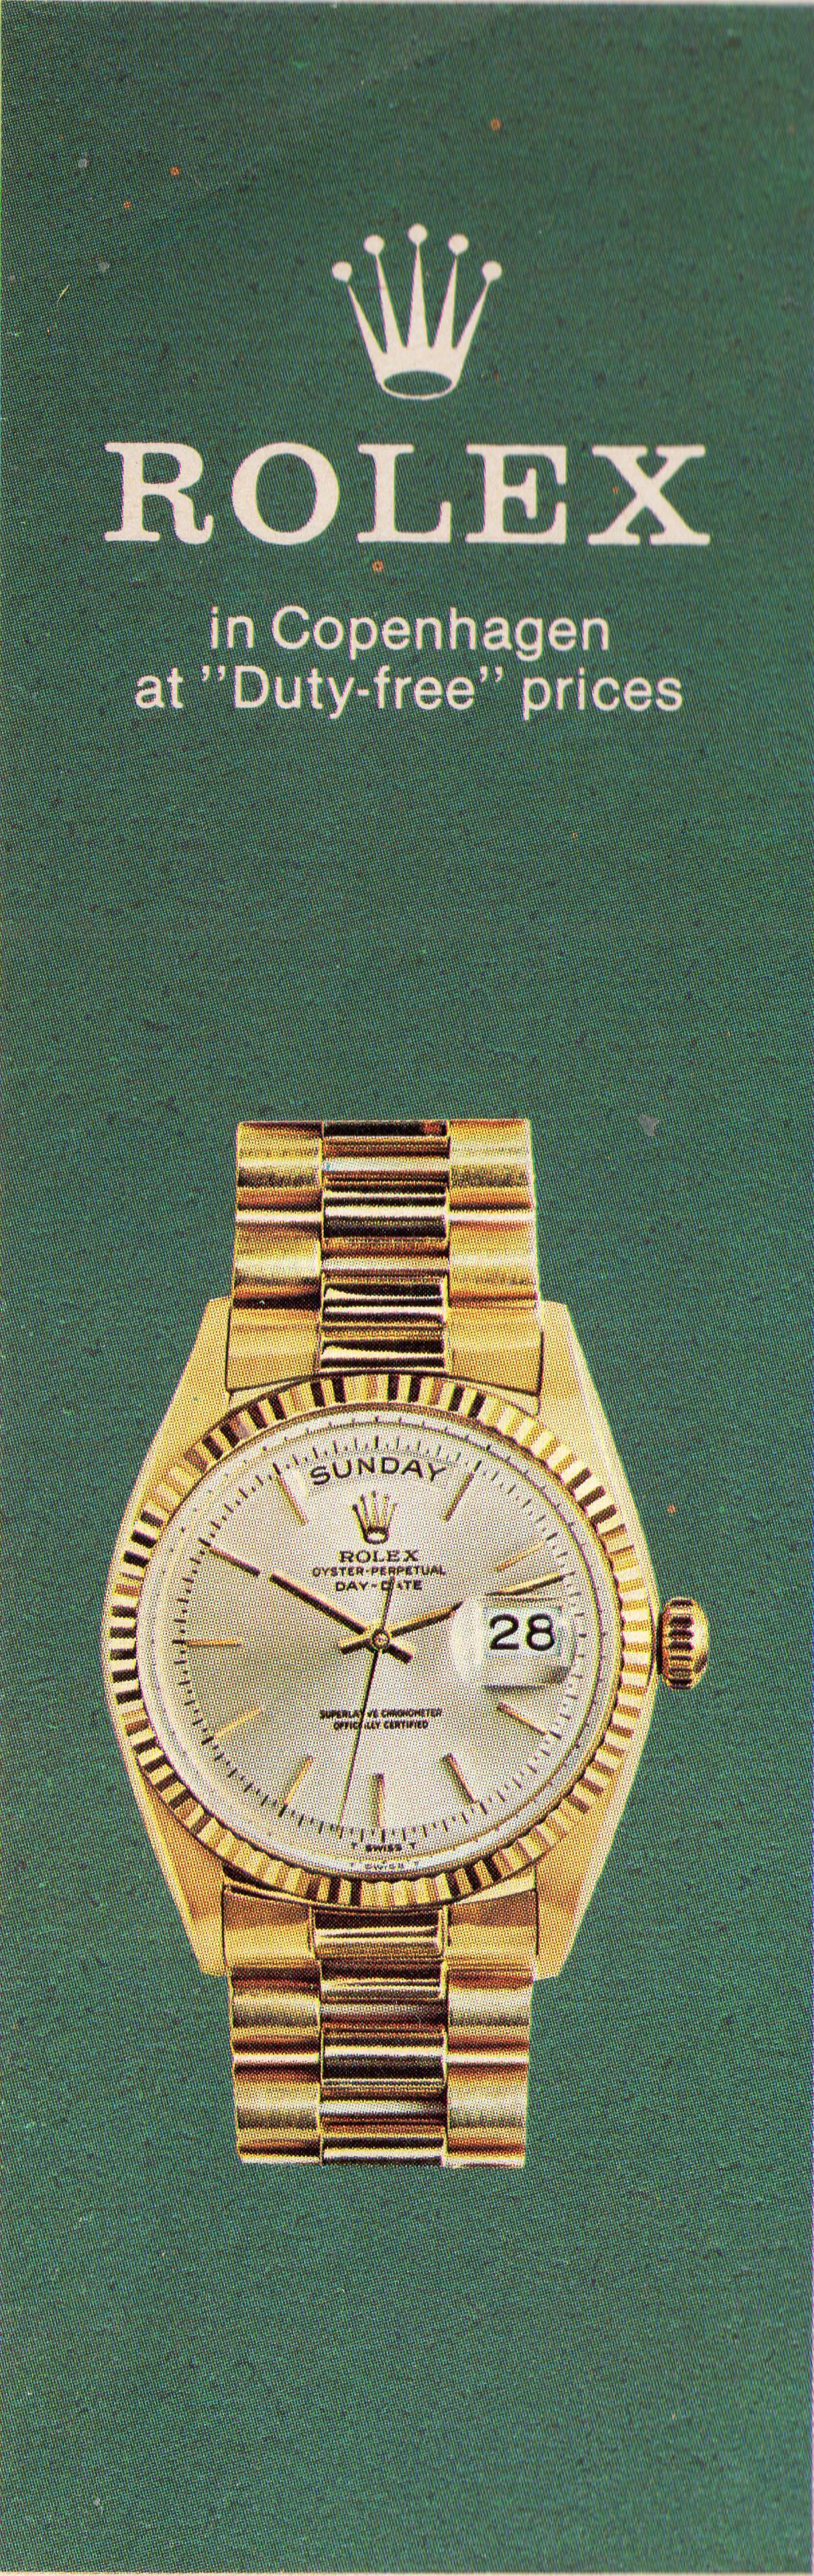 Rolex 1977 0.jpg